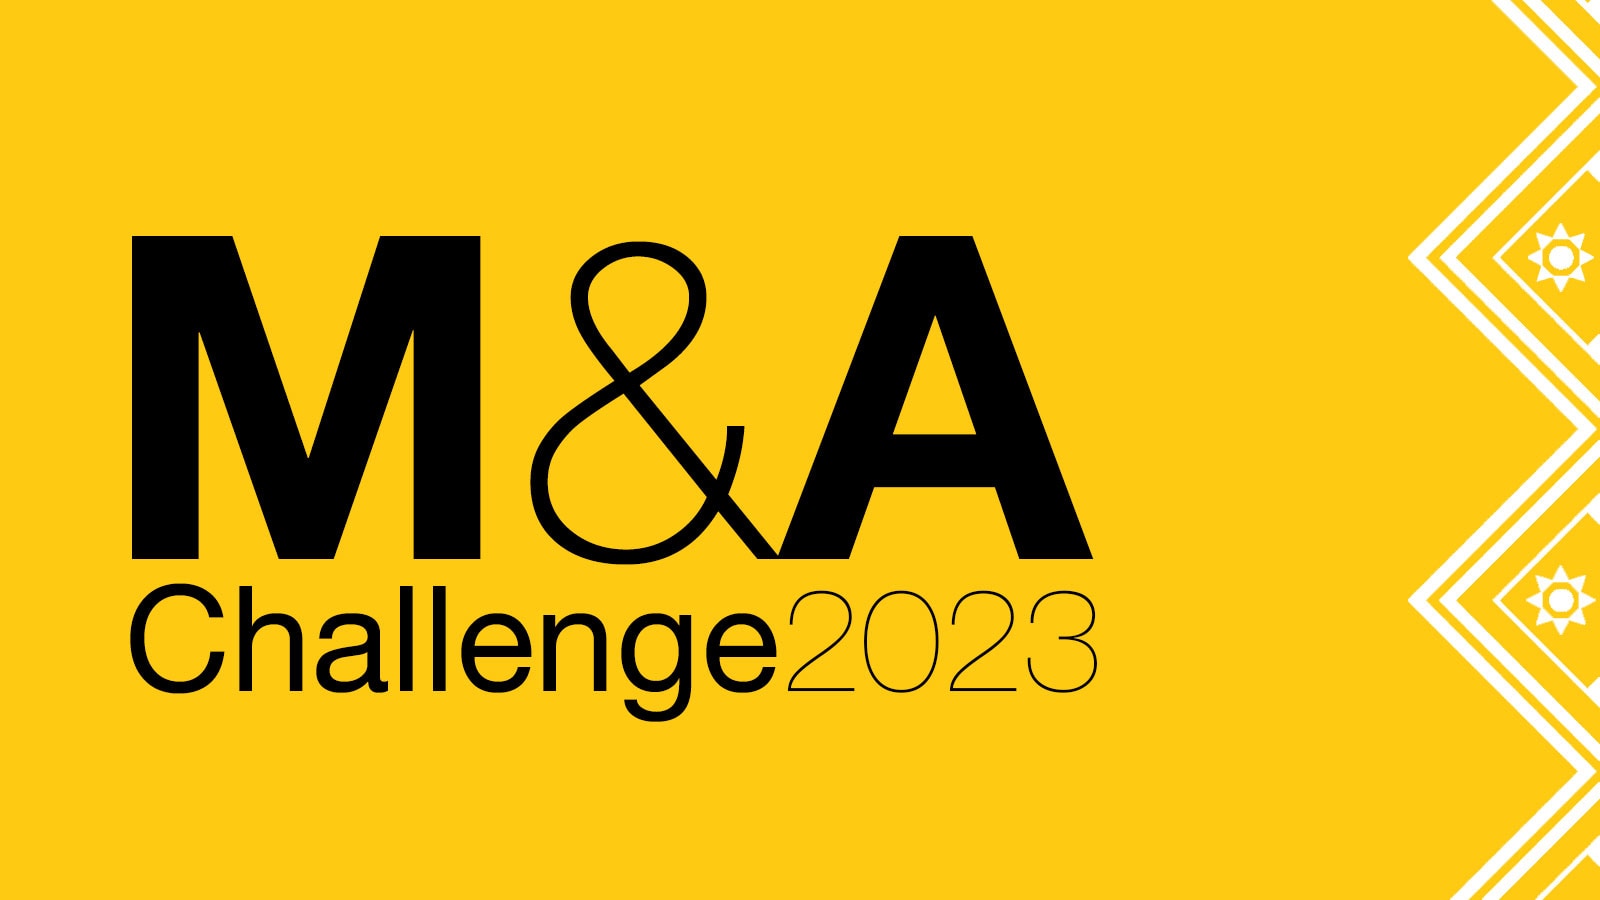 M&A Challenge 2023